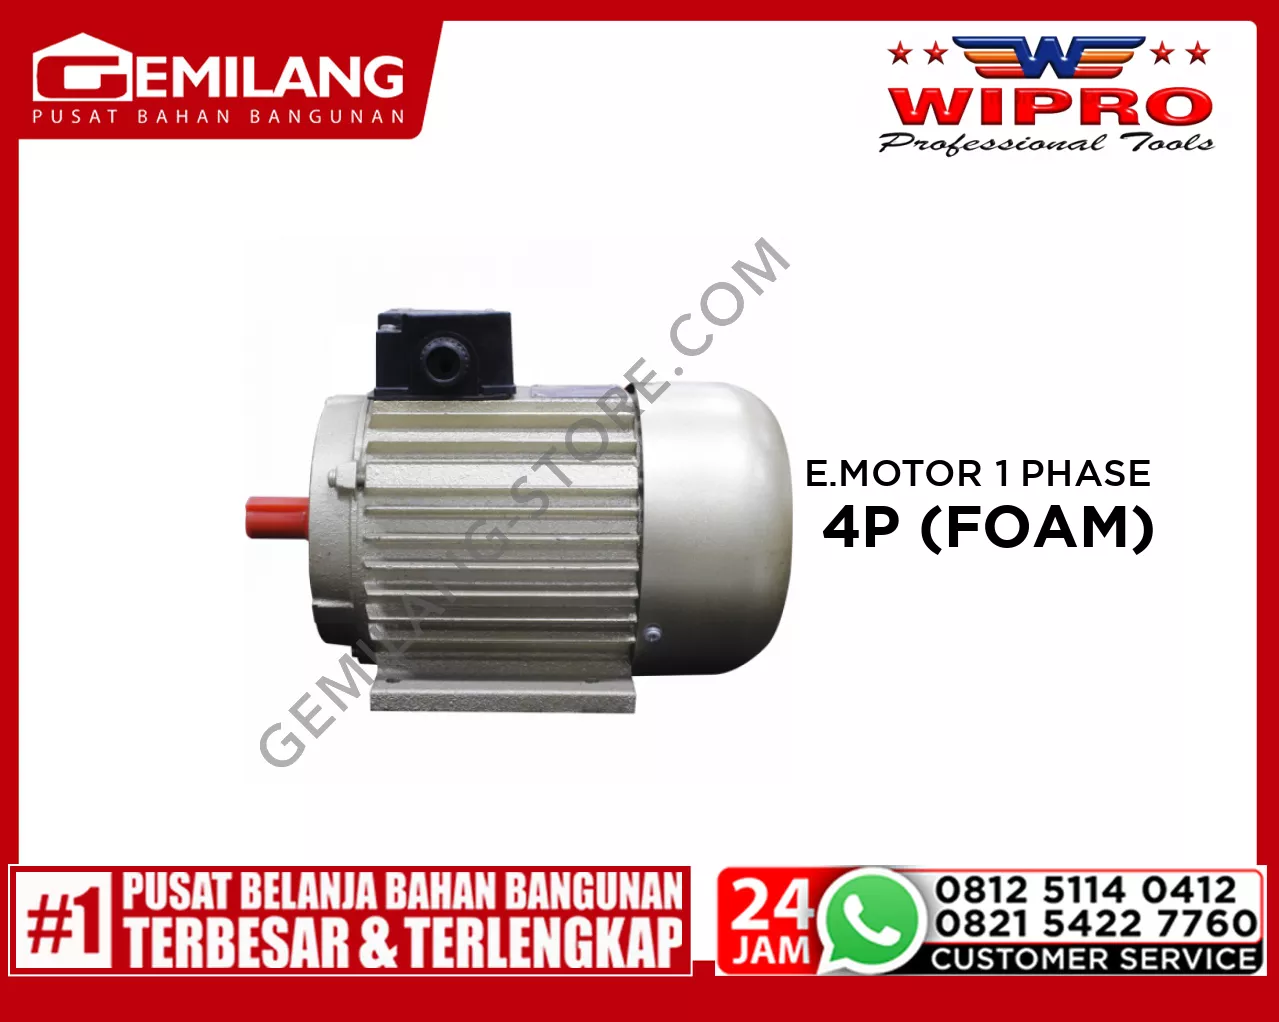 WIPRO ELECTROMOTOR 1 PHASE 1 5HP 4P (FOAM)